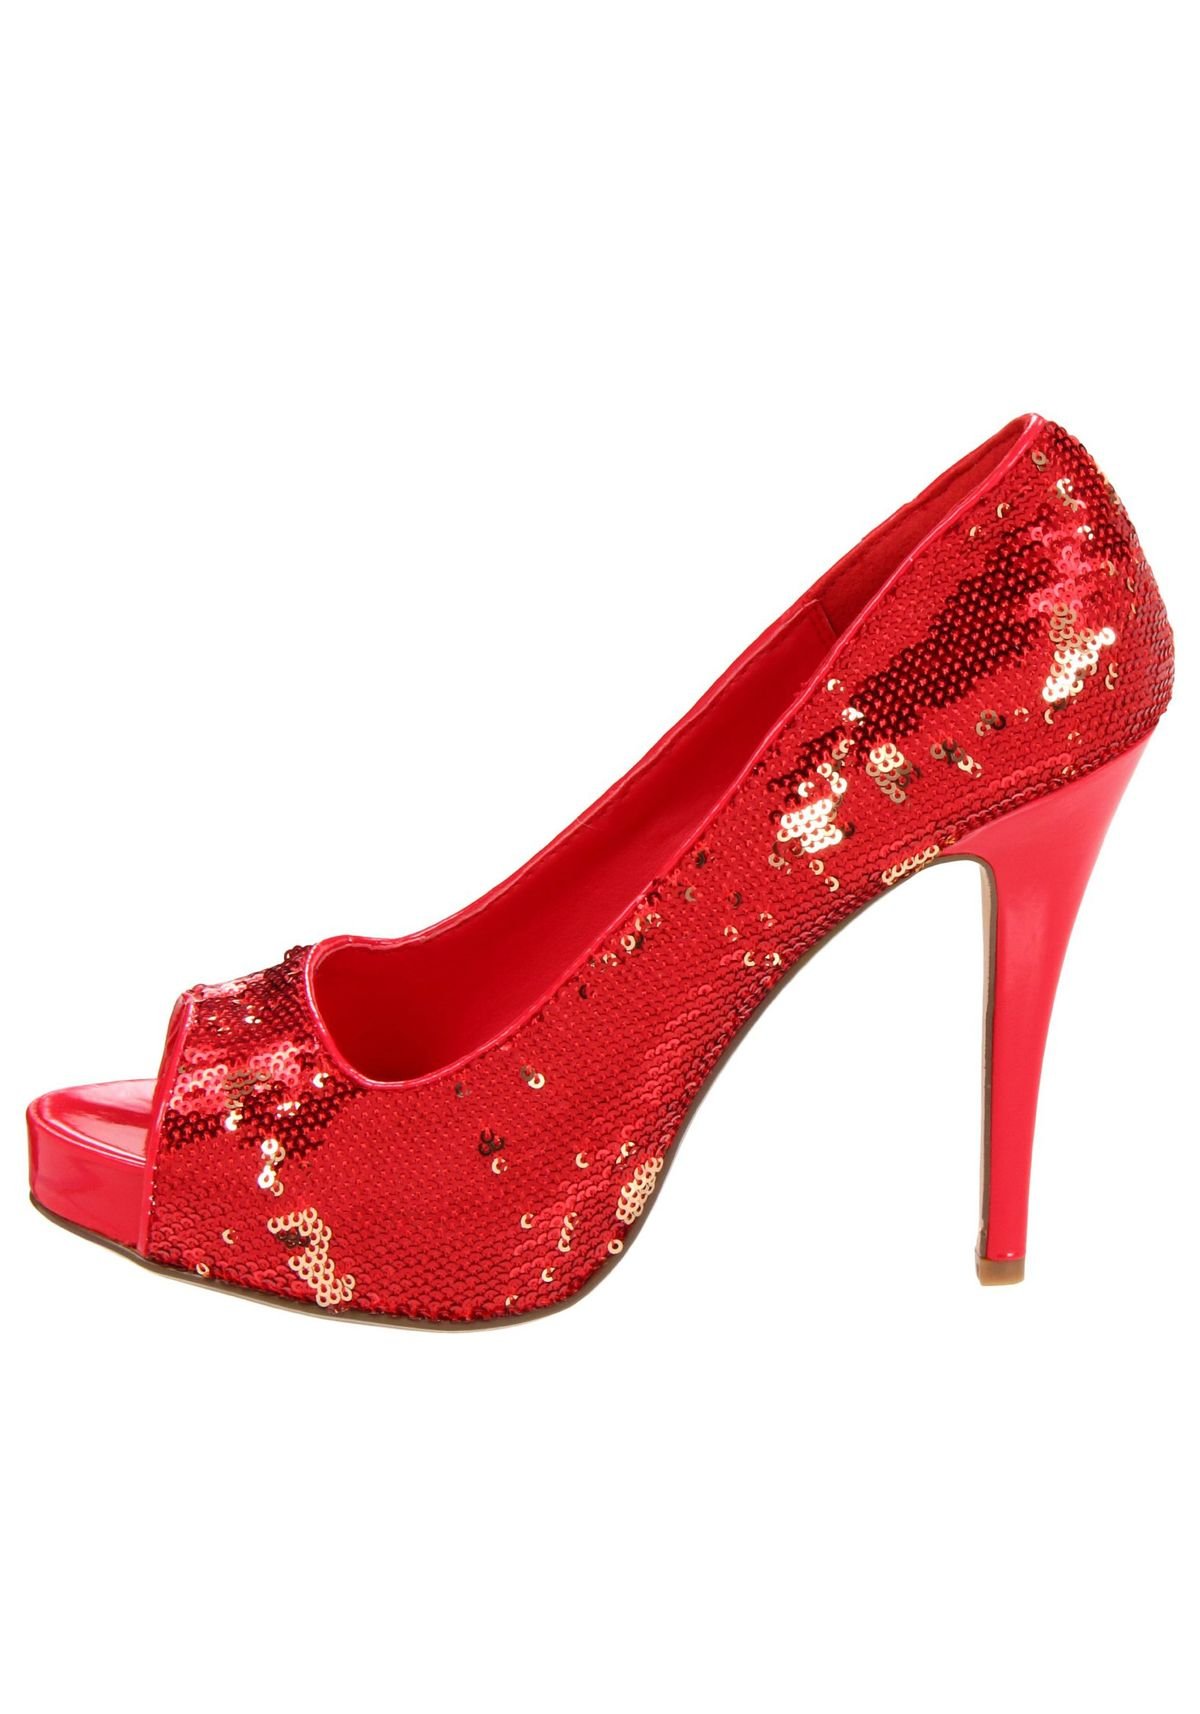 Ellie Shoes 415-FLAMINGO Flamingo 4'' Heel Open Toe Glitter Pumps | eBay